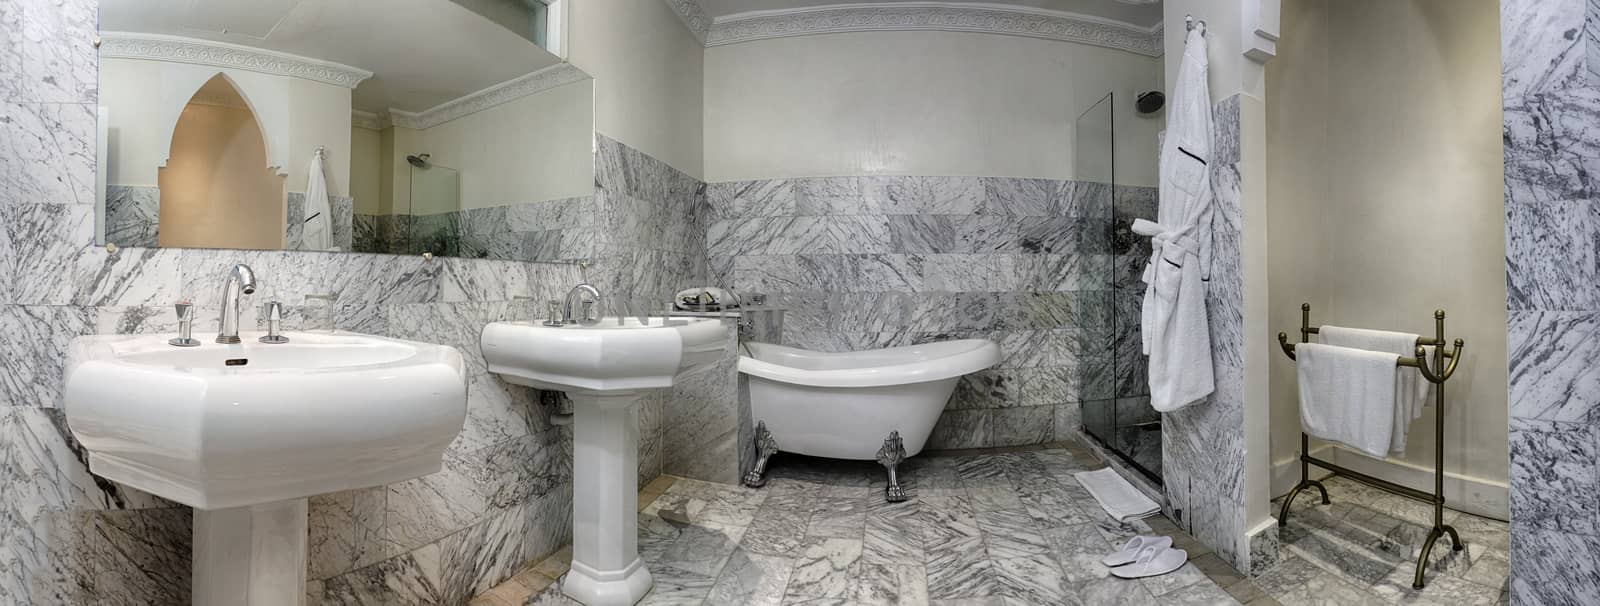 Spacious bathroom of a luxury suite